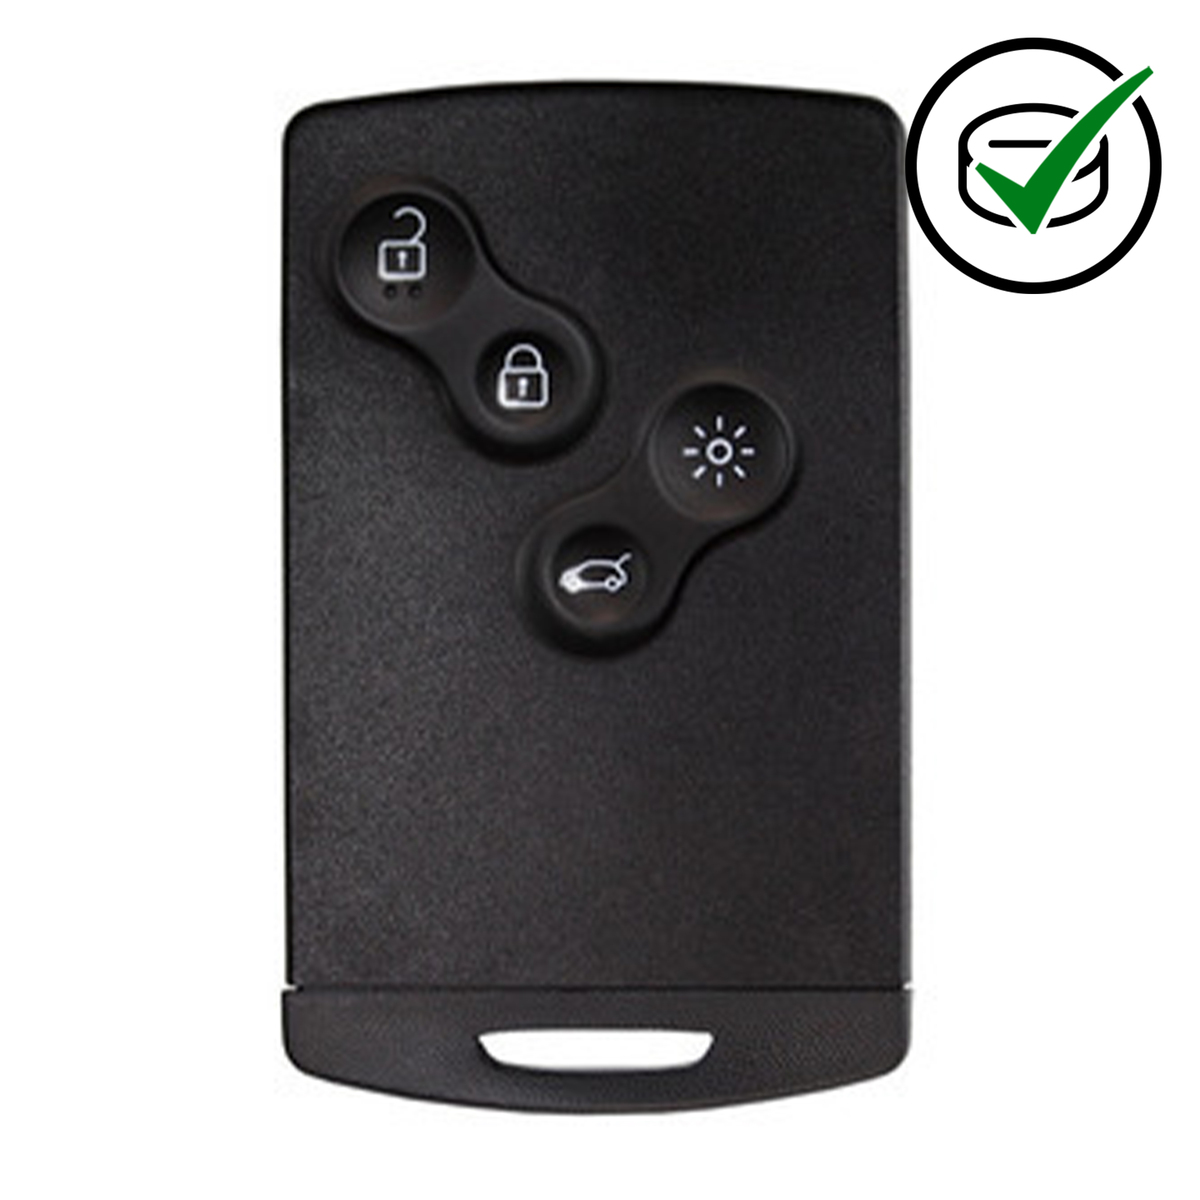 Renault compatible 4 button Proximity remote 433 MHz